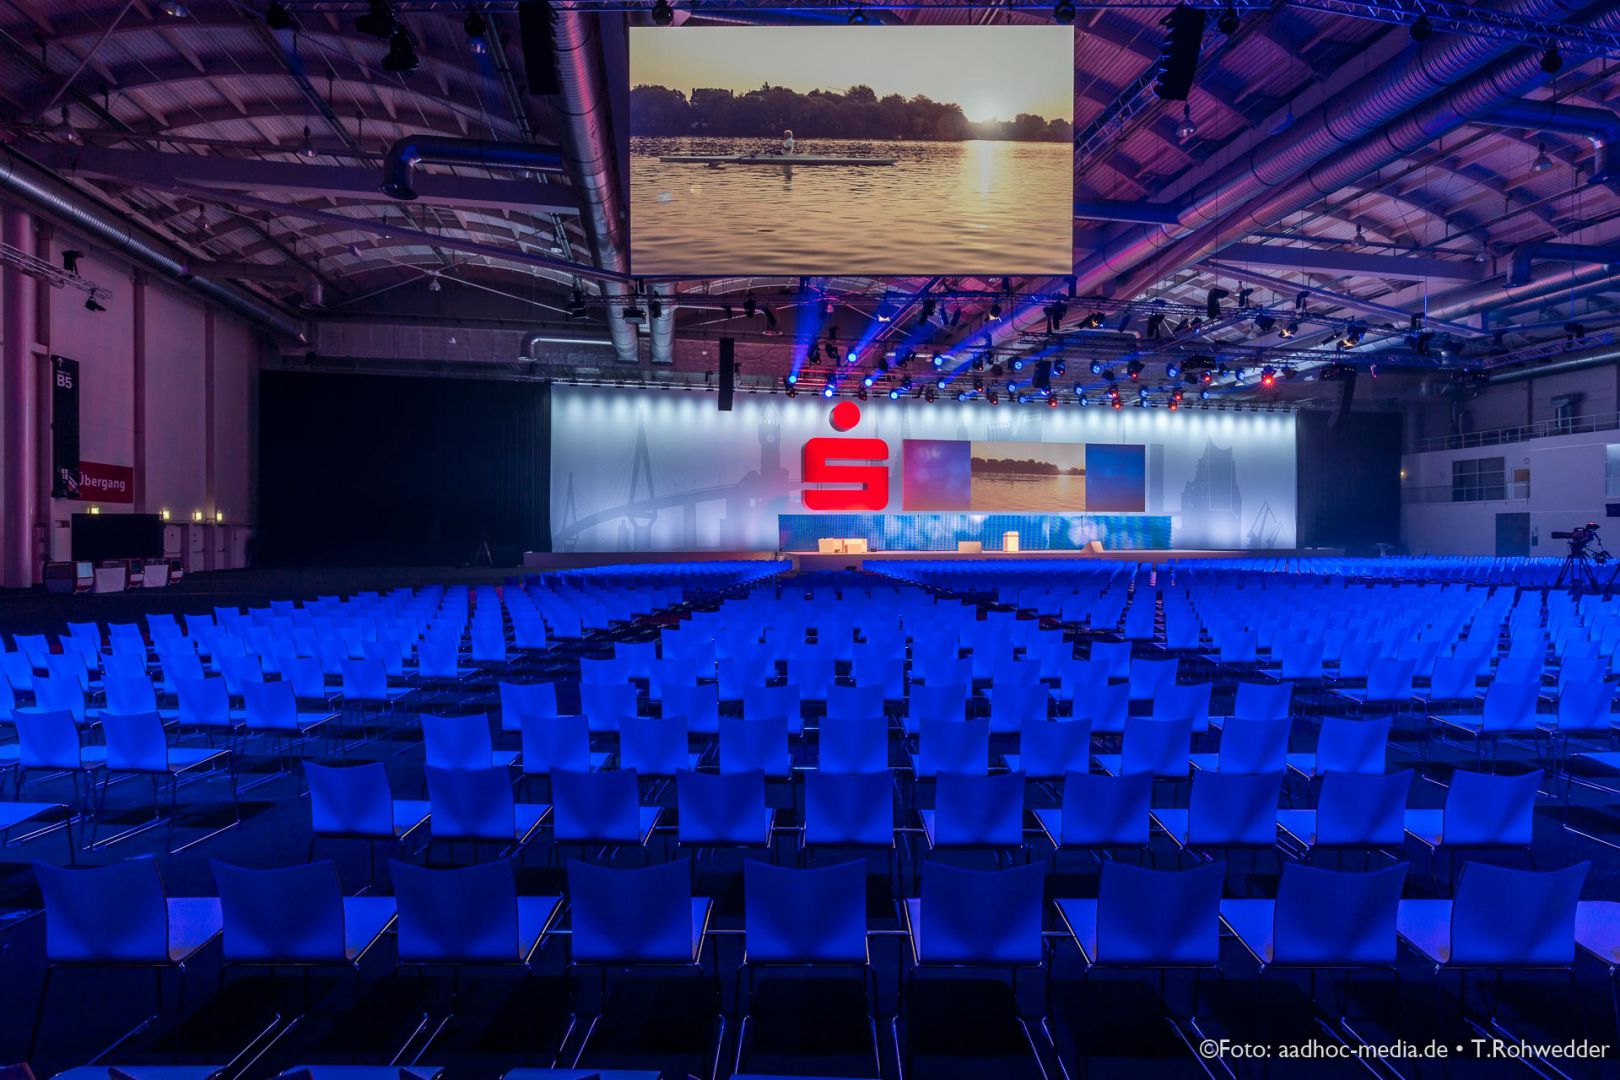 Haspa Konferenz 2015 - Pelikan & Friends - ©Foto: aadhoc-media.de • Thomas Rohwedder